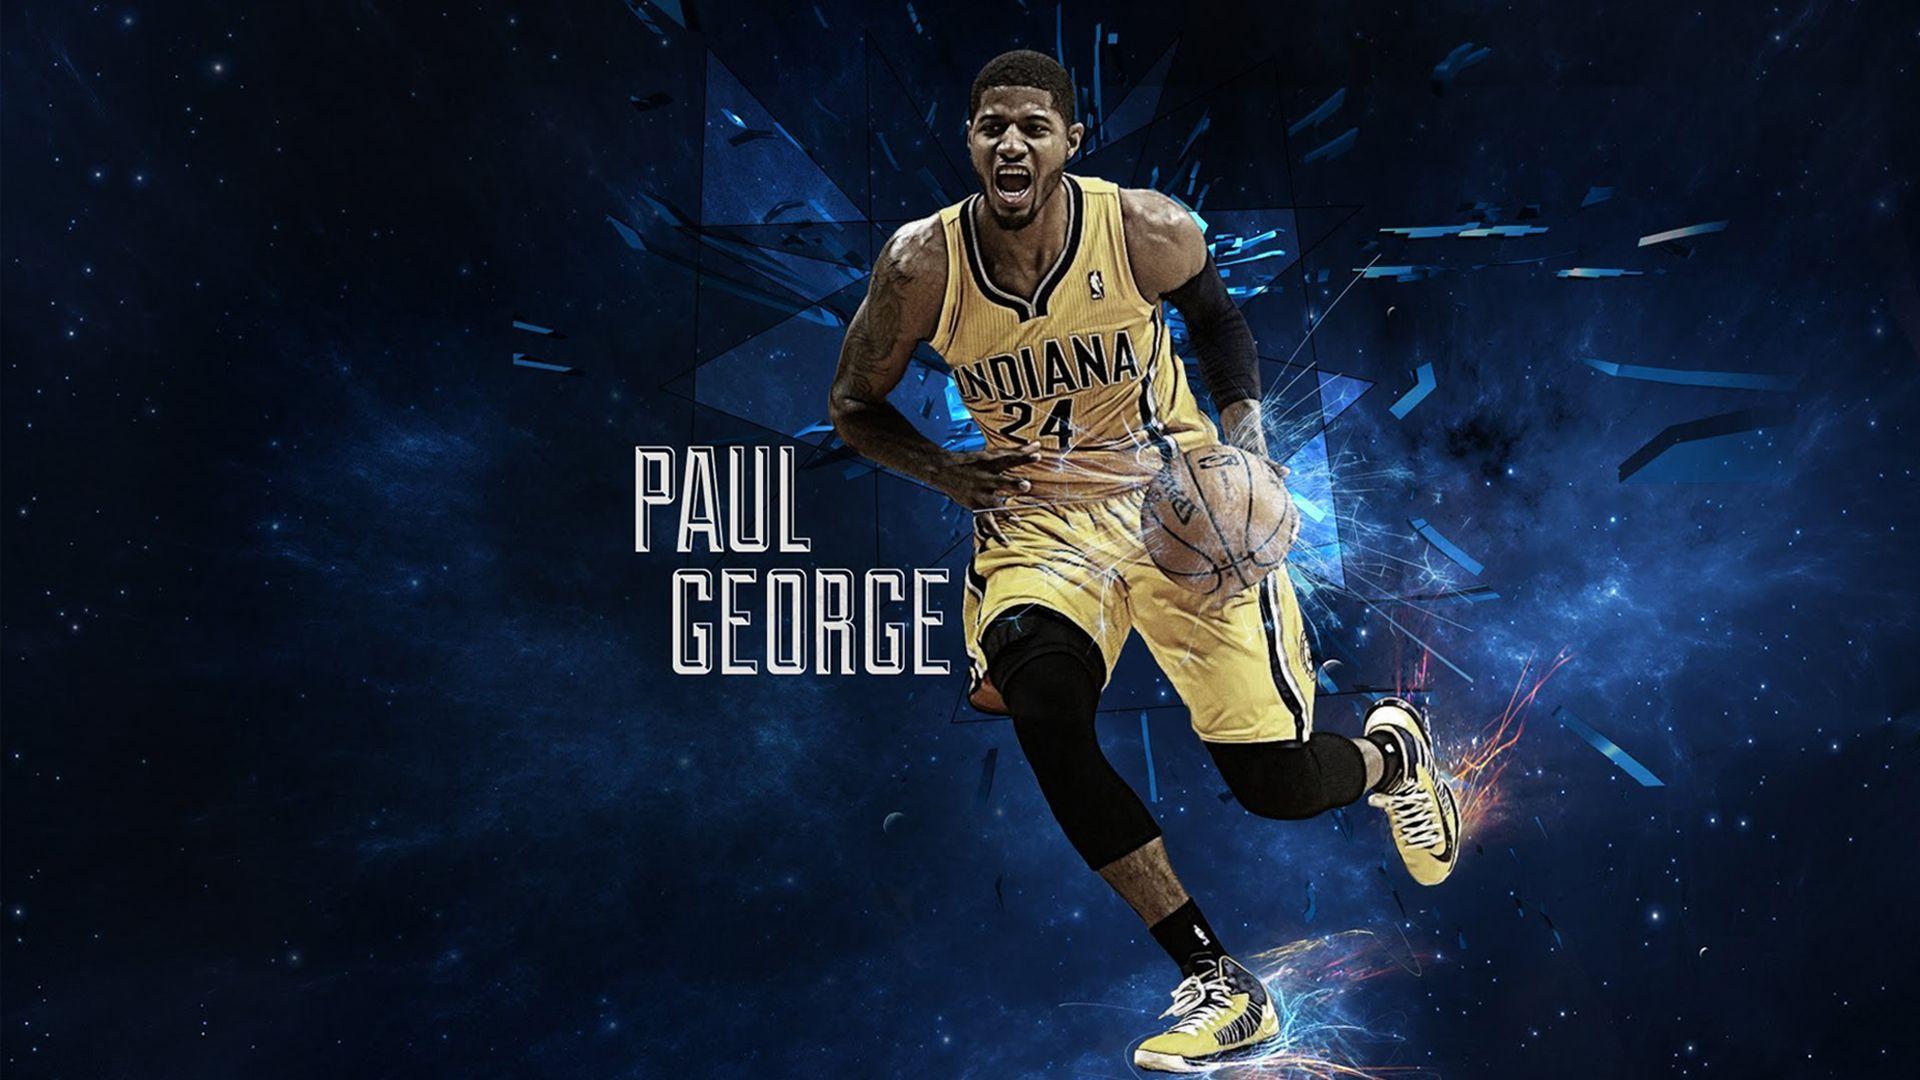 Paul George Wallpaper Basketball NBA Players